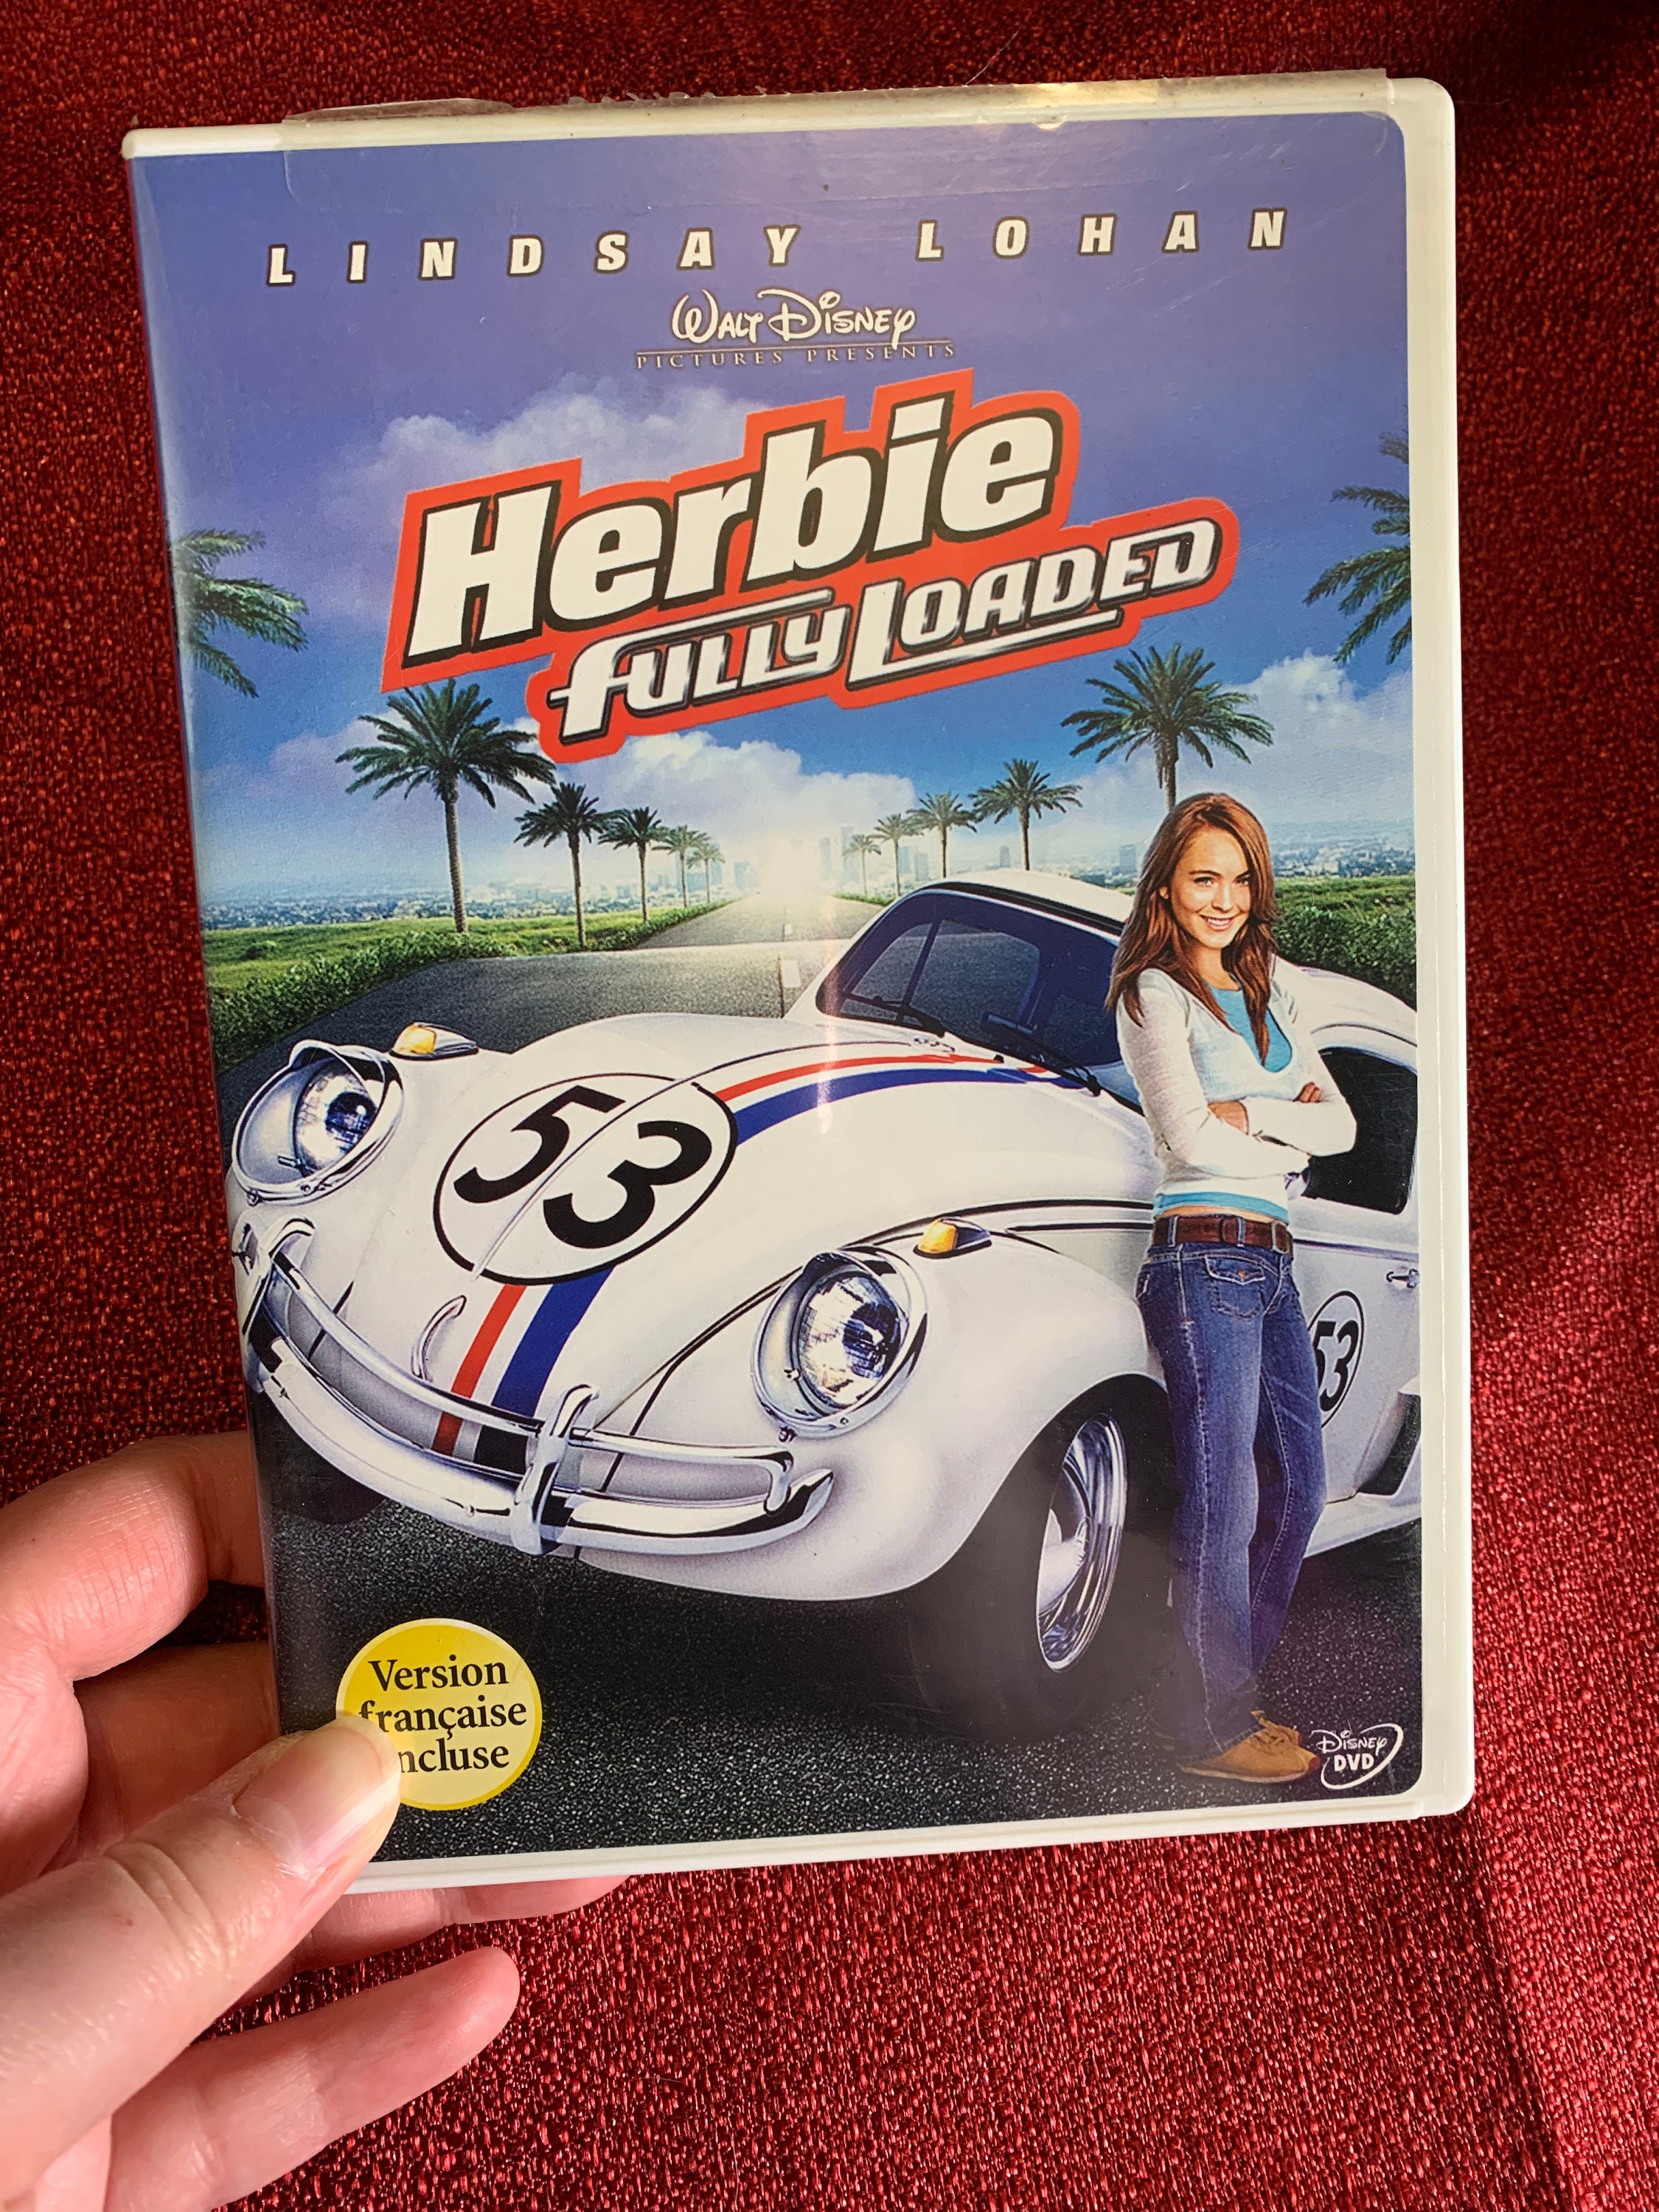 Herbie Fully Loaded Disney DVD Movie Lindsay Lohan pic